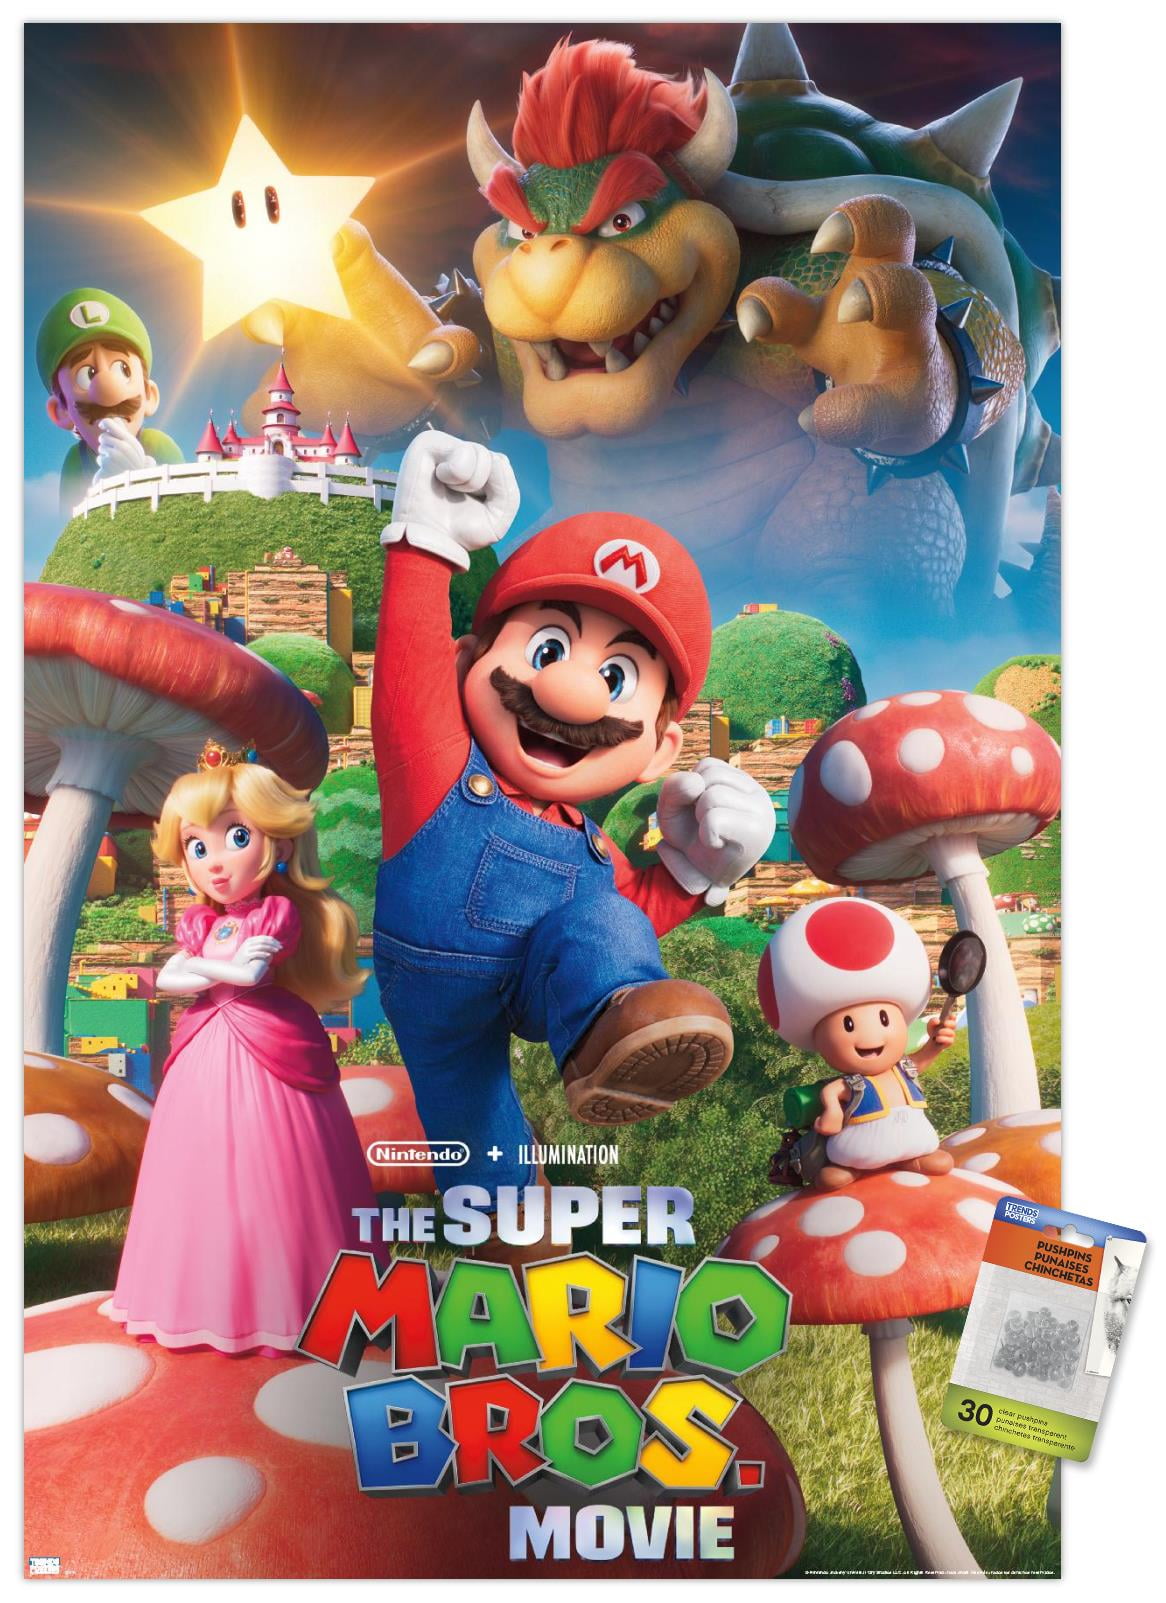 FREE Printable Super Mario Bros. Memory Game